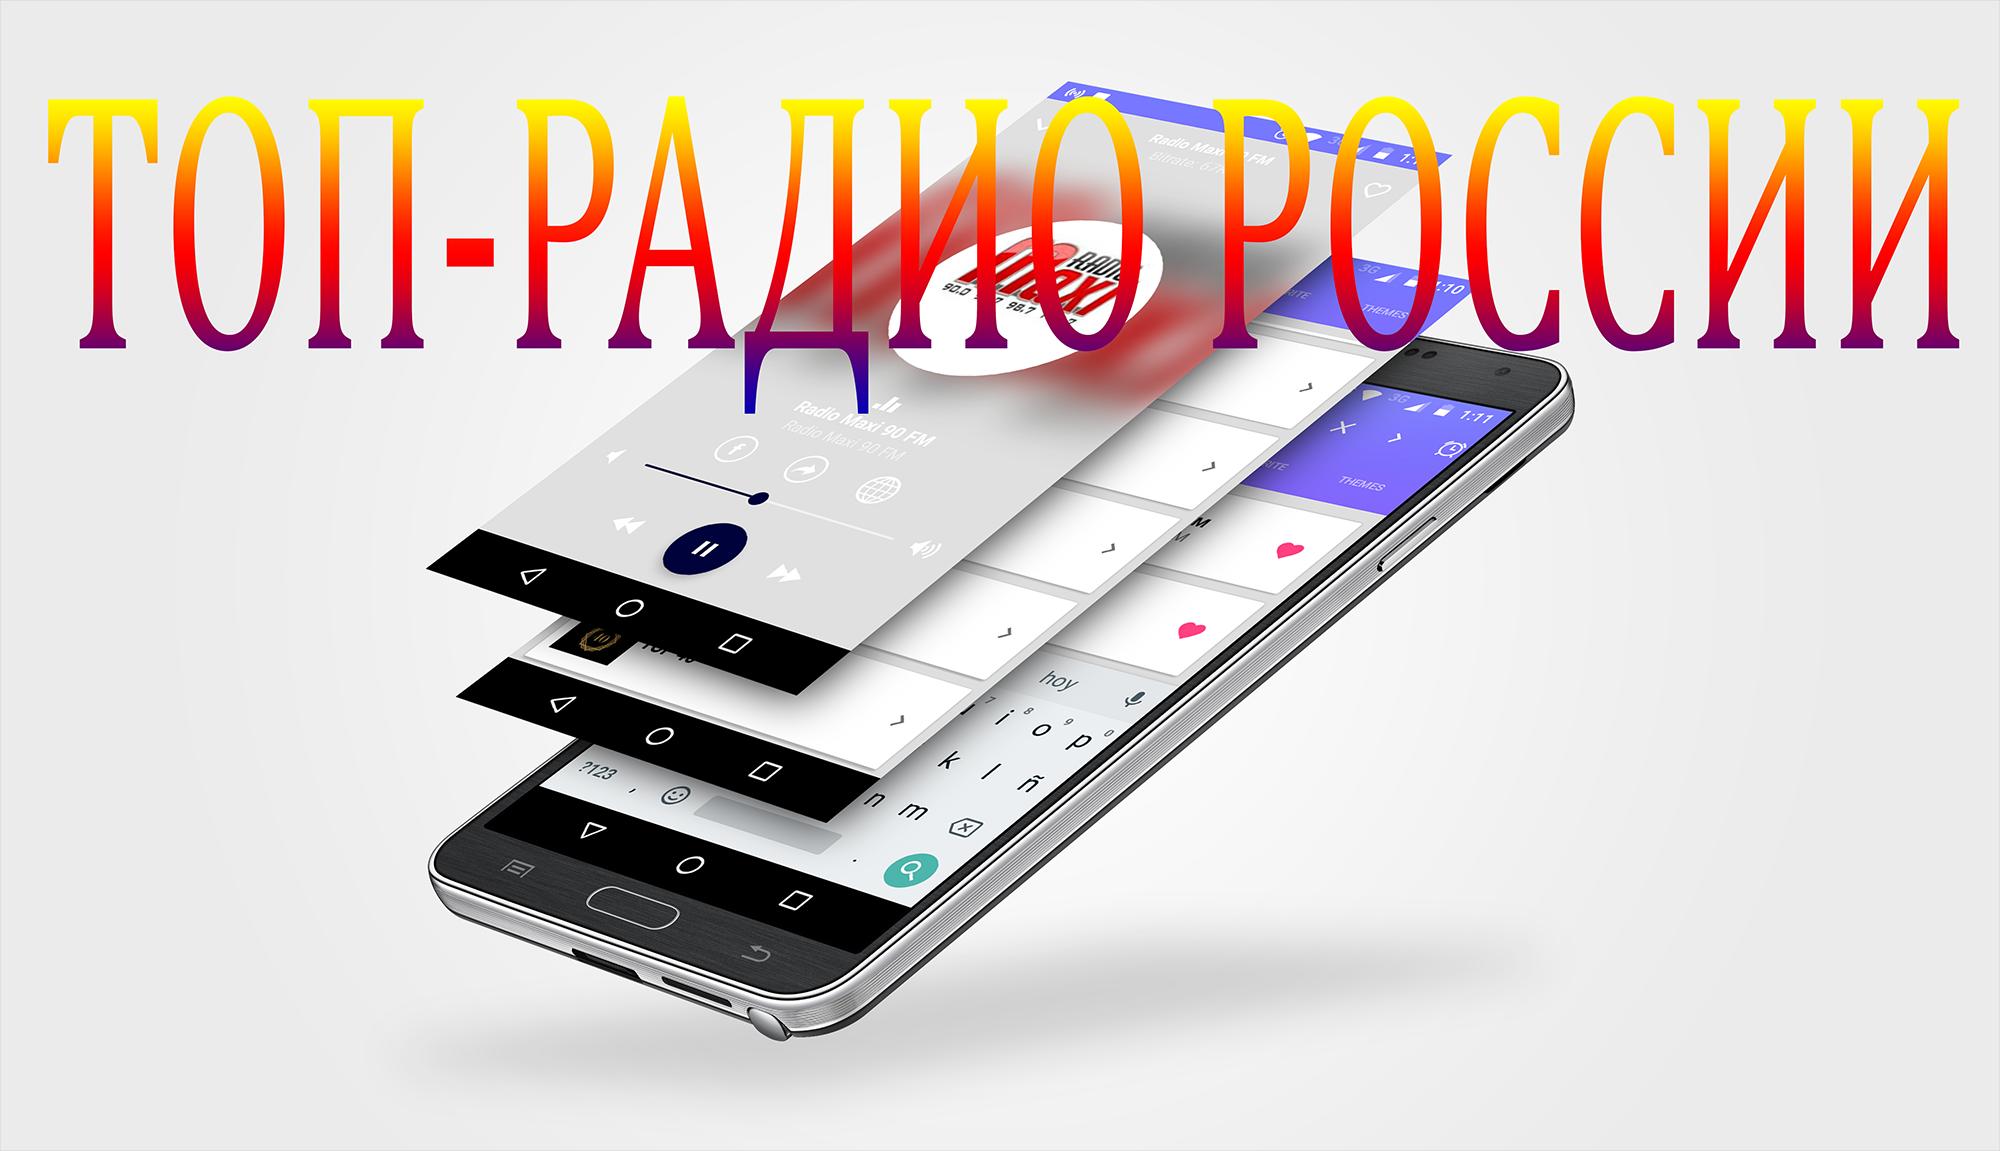 Vostok FM Radio Online for Android - APK Download